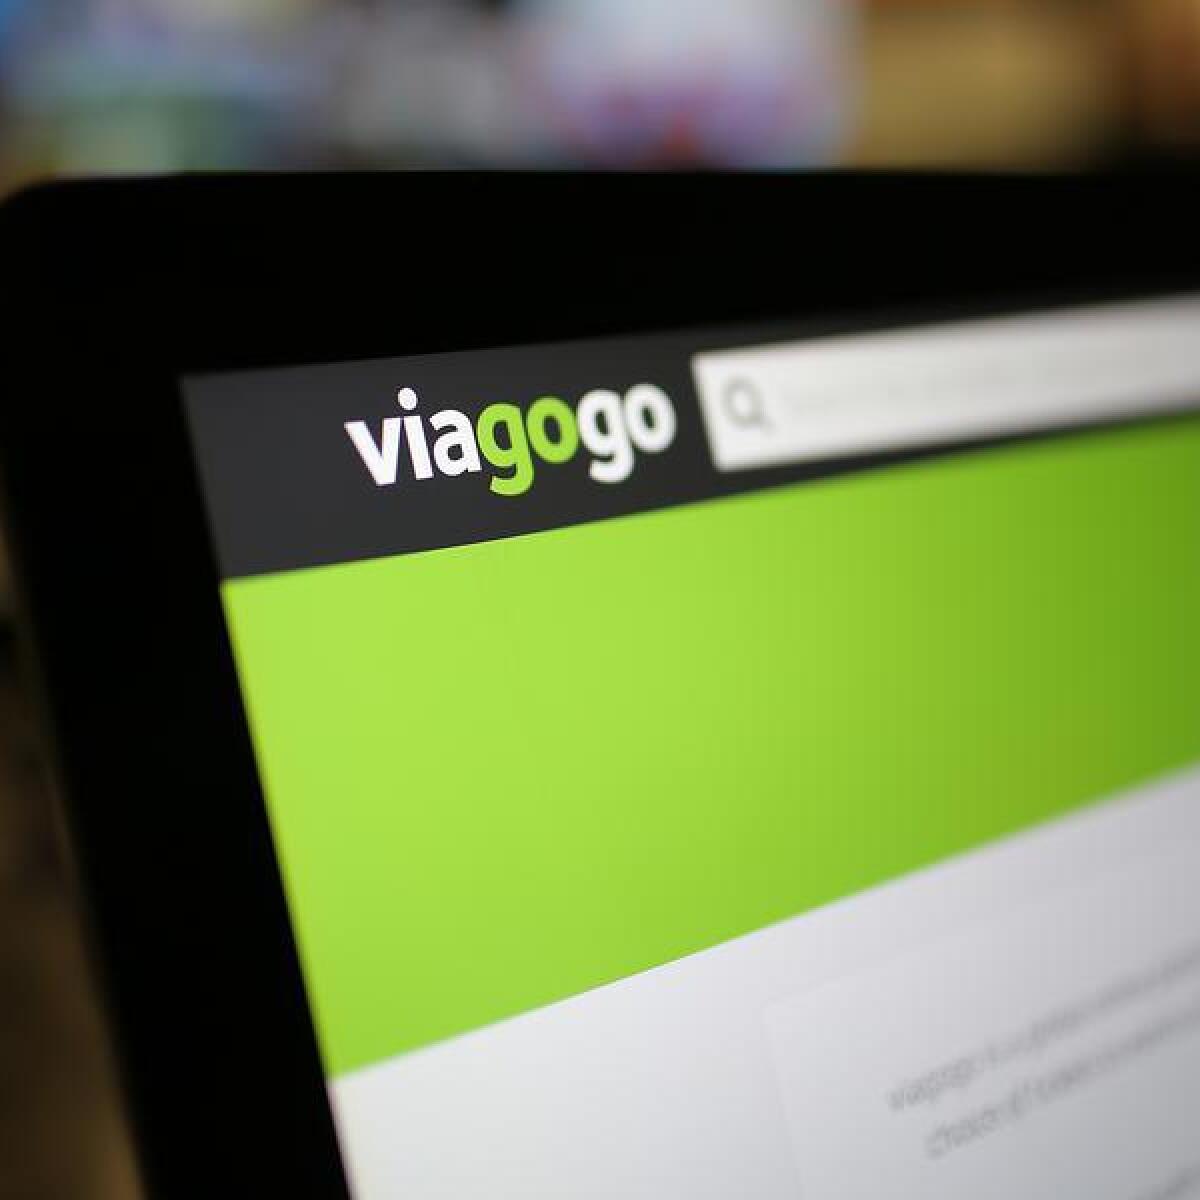 The Viagogo website in 2019.